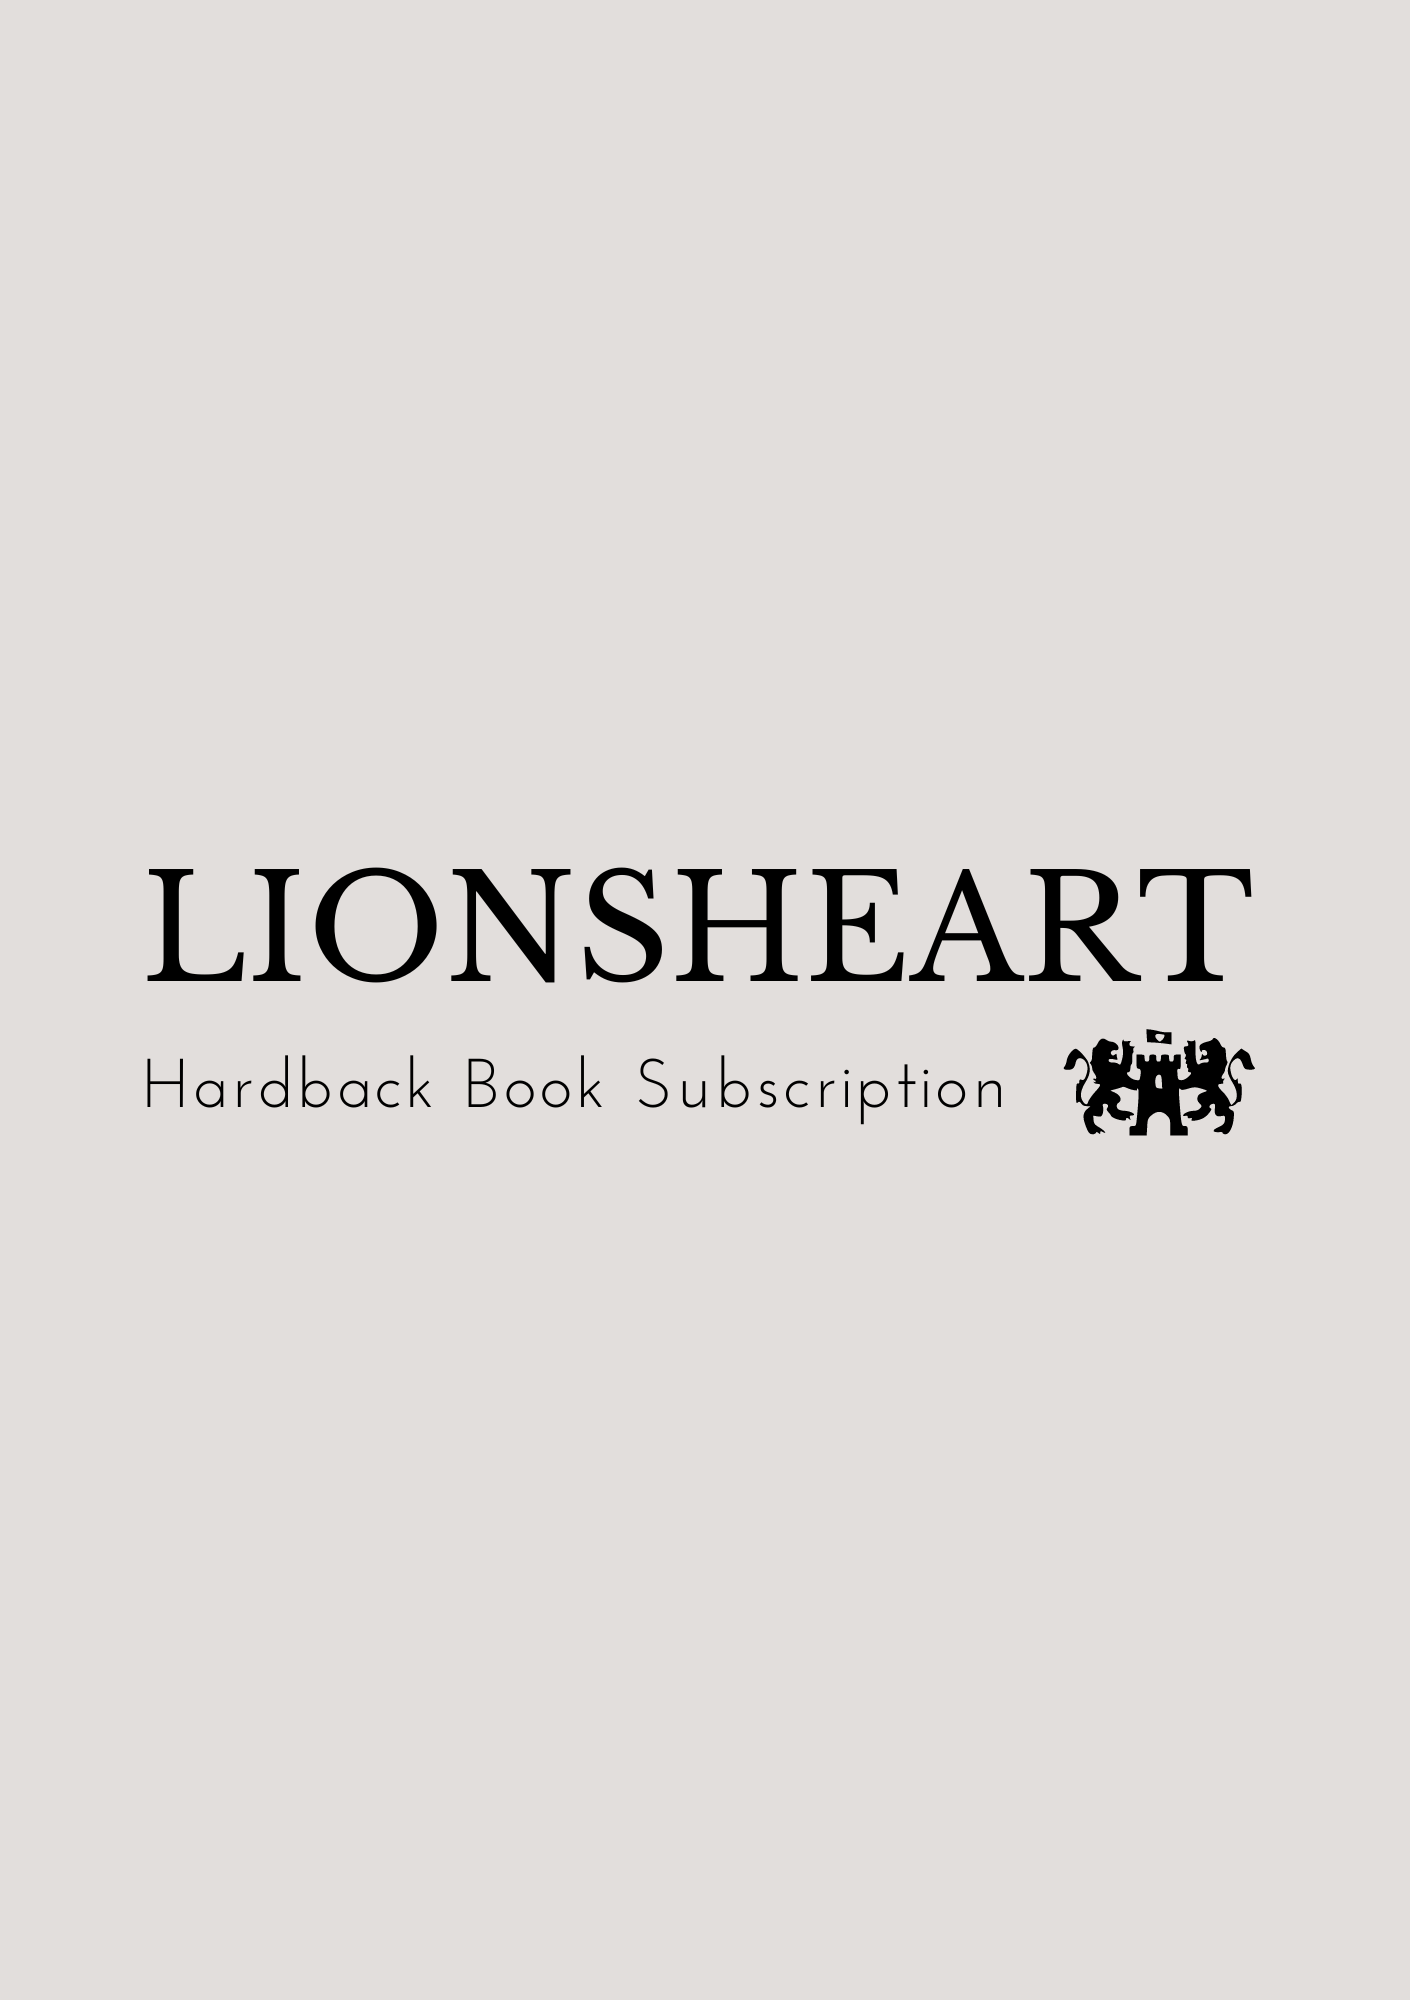 Lionsheart Book Subscription (Hardback)